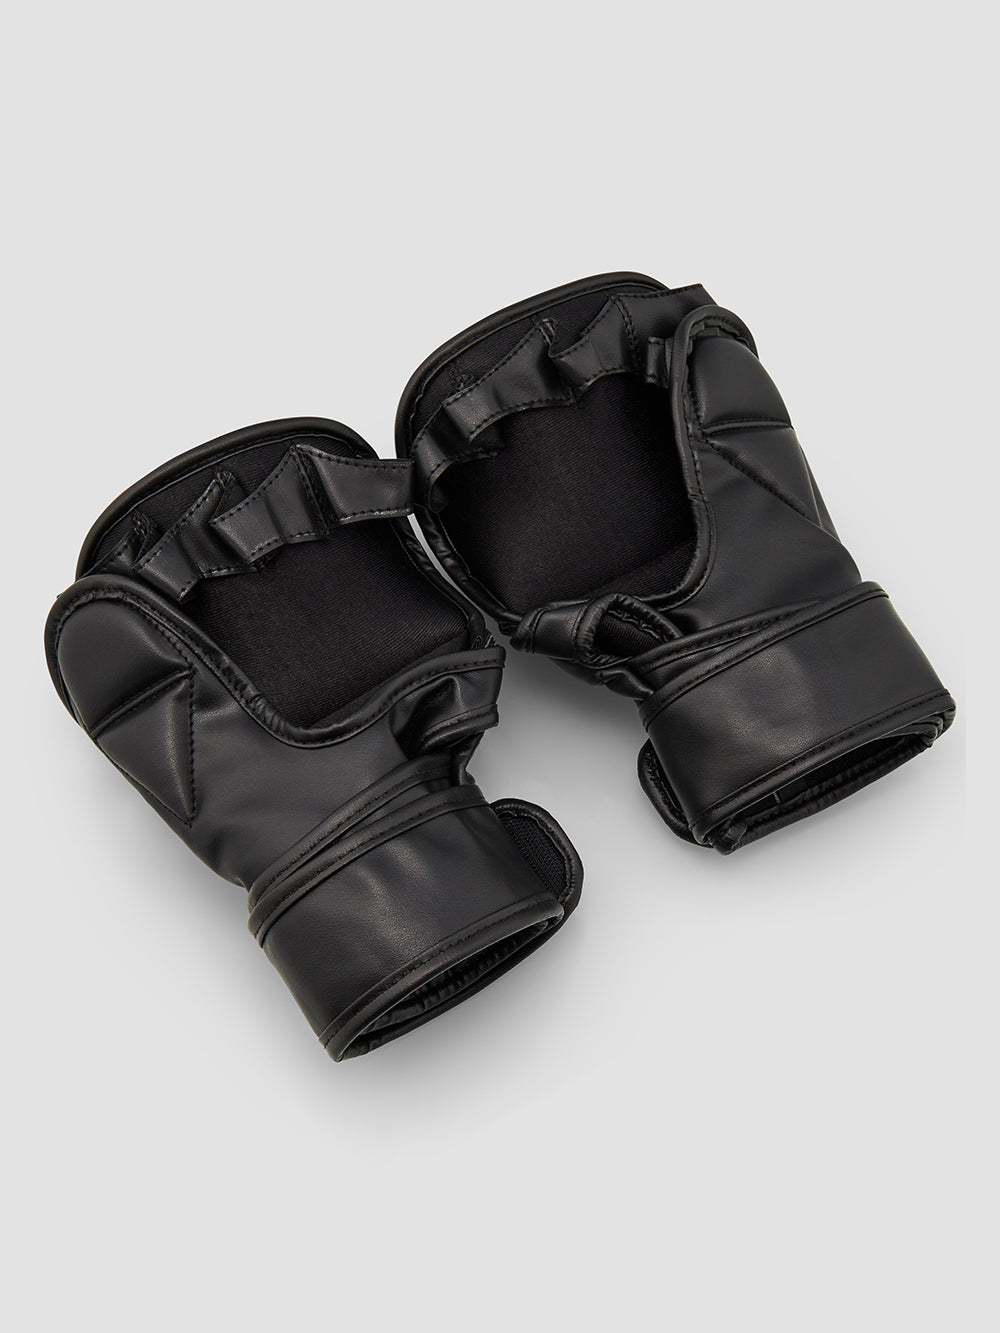 MMA Gloves Classic Black